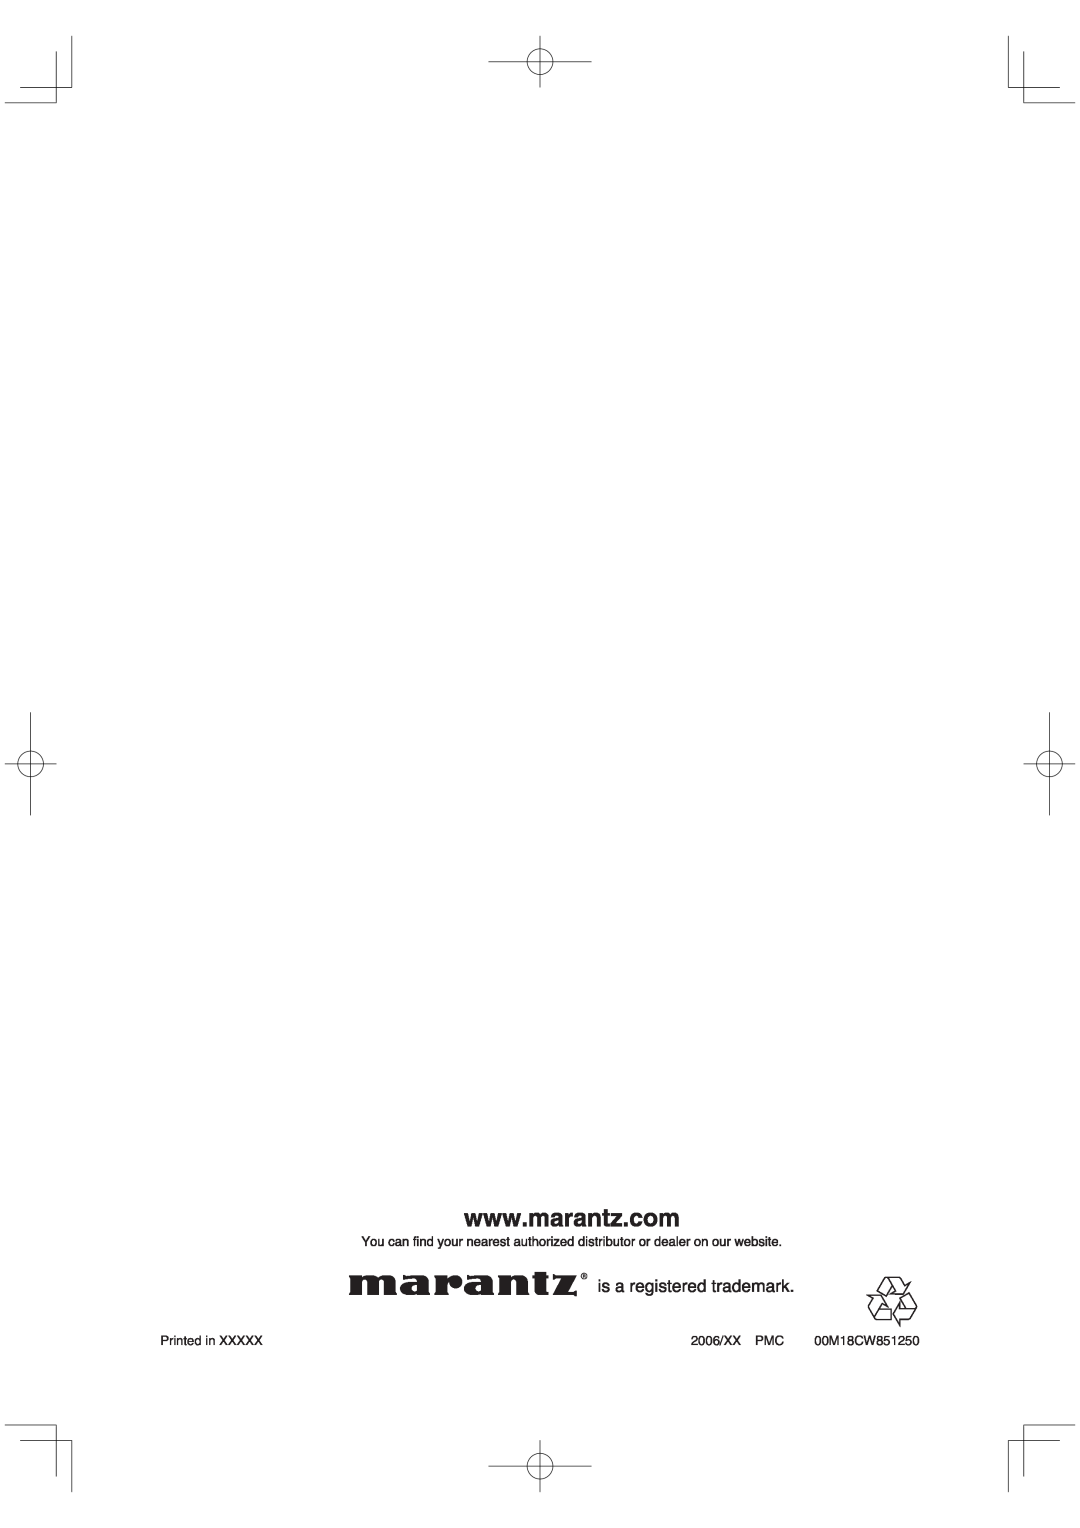 Marantz VC6001 manual Printed in, 2006/XX PMC, 00M18CW851250 